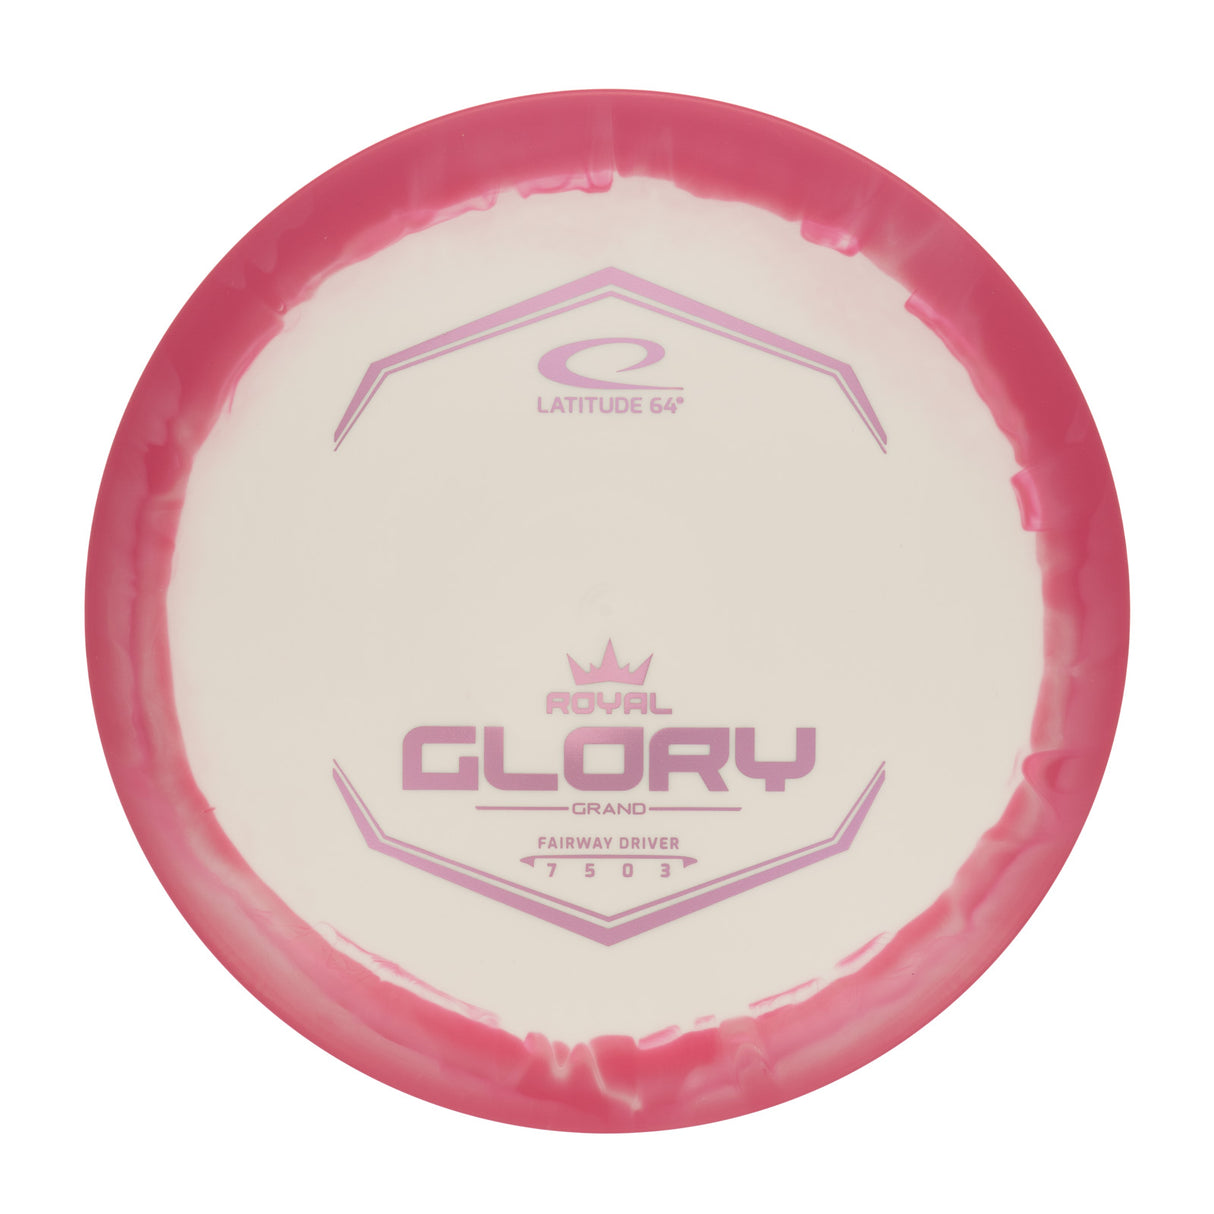 Latitude 64 Glory - Royal Grand Orbit 173g | Style 0002